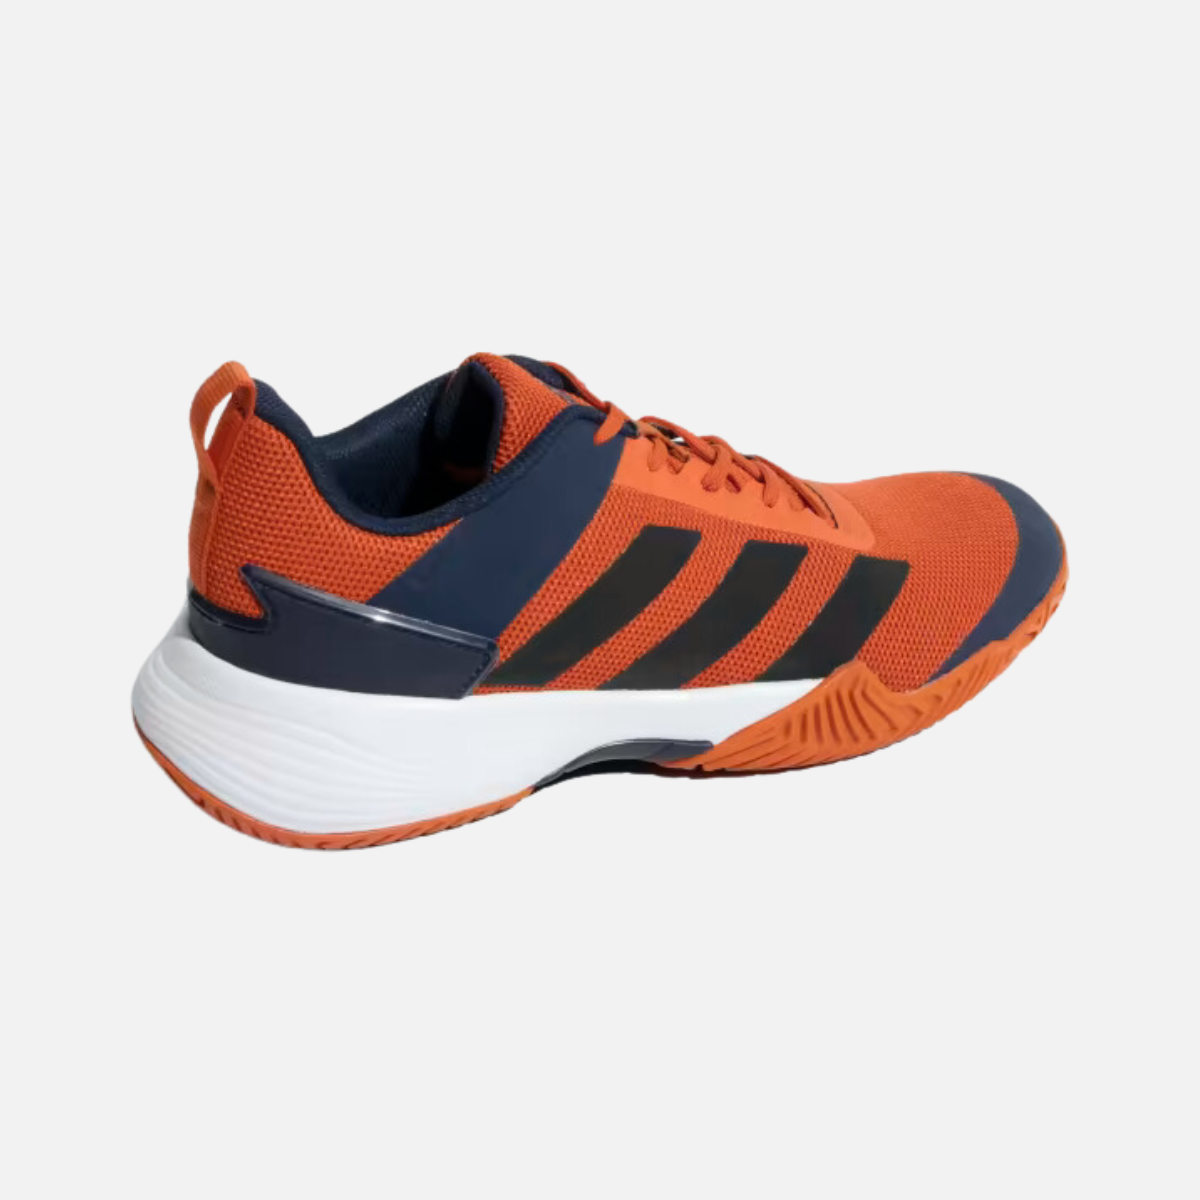 Adidas Tennis Top V2 Men's Tennis Shoes -Preloved Red/Collegiate Navy